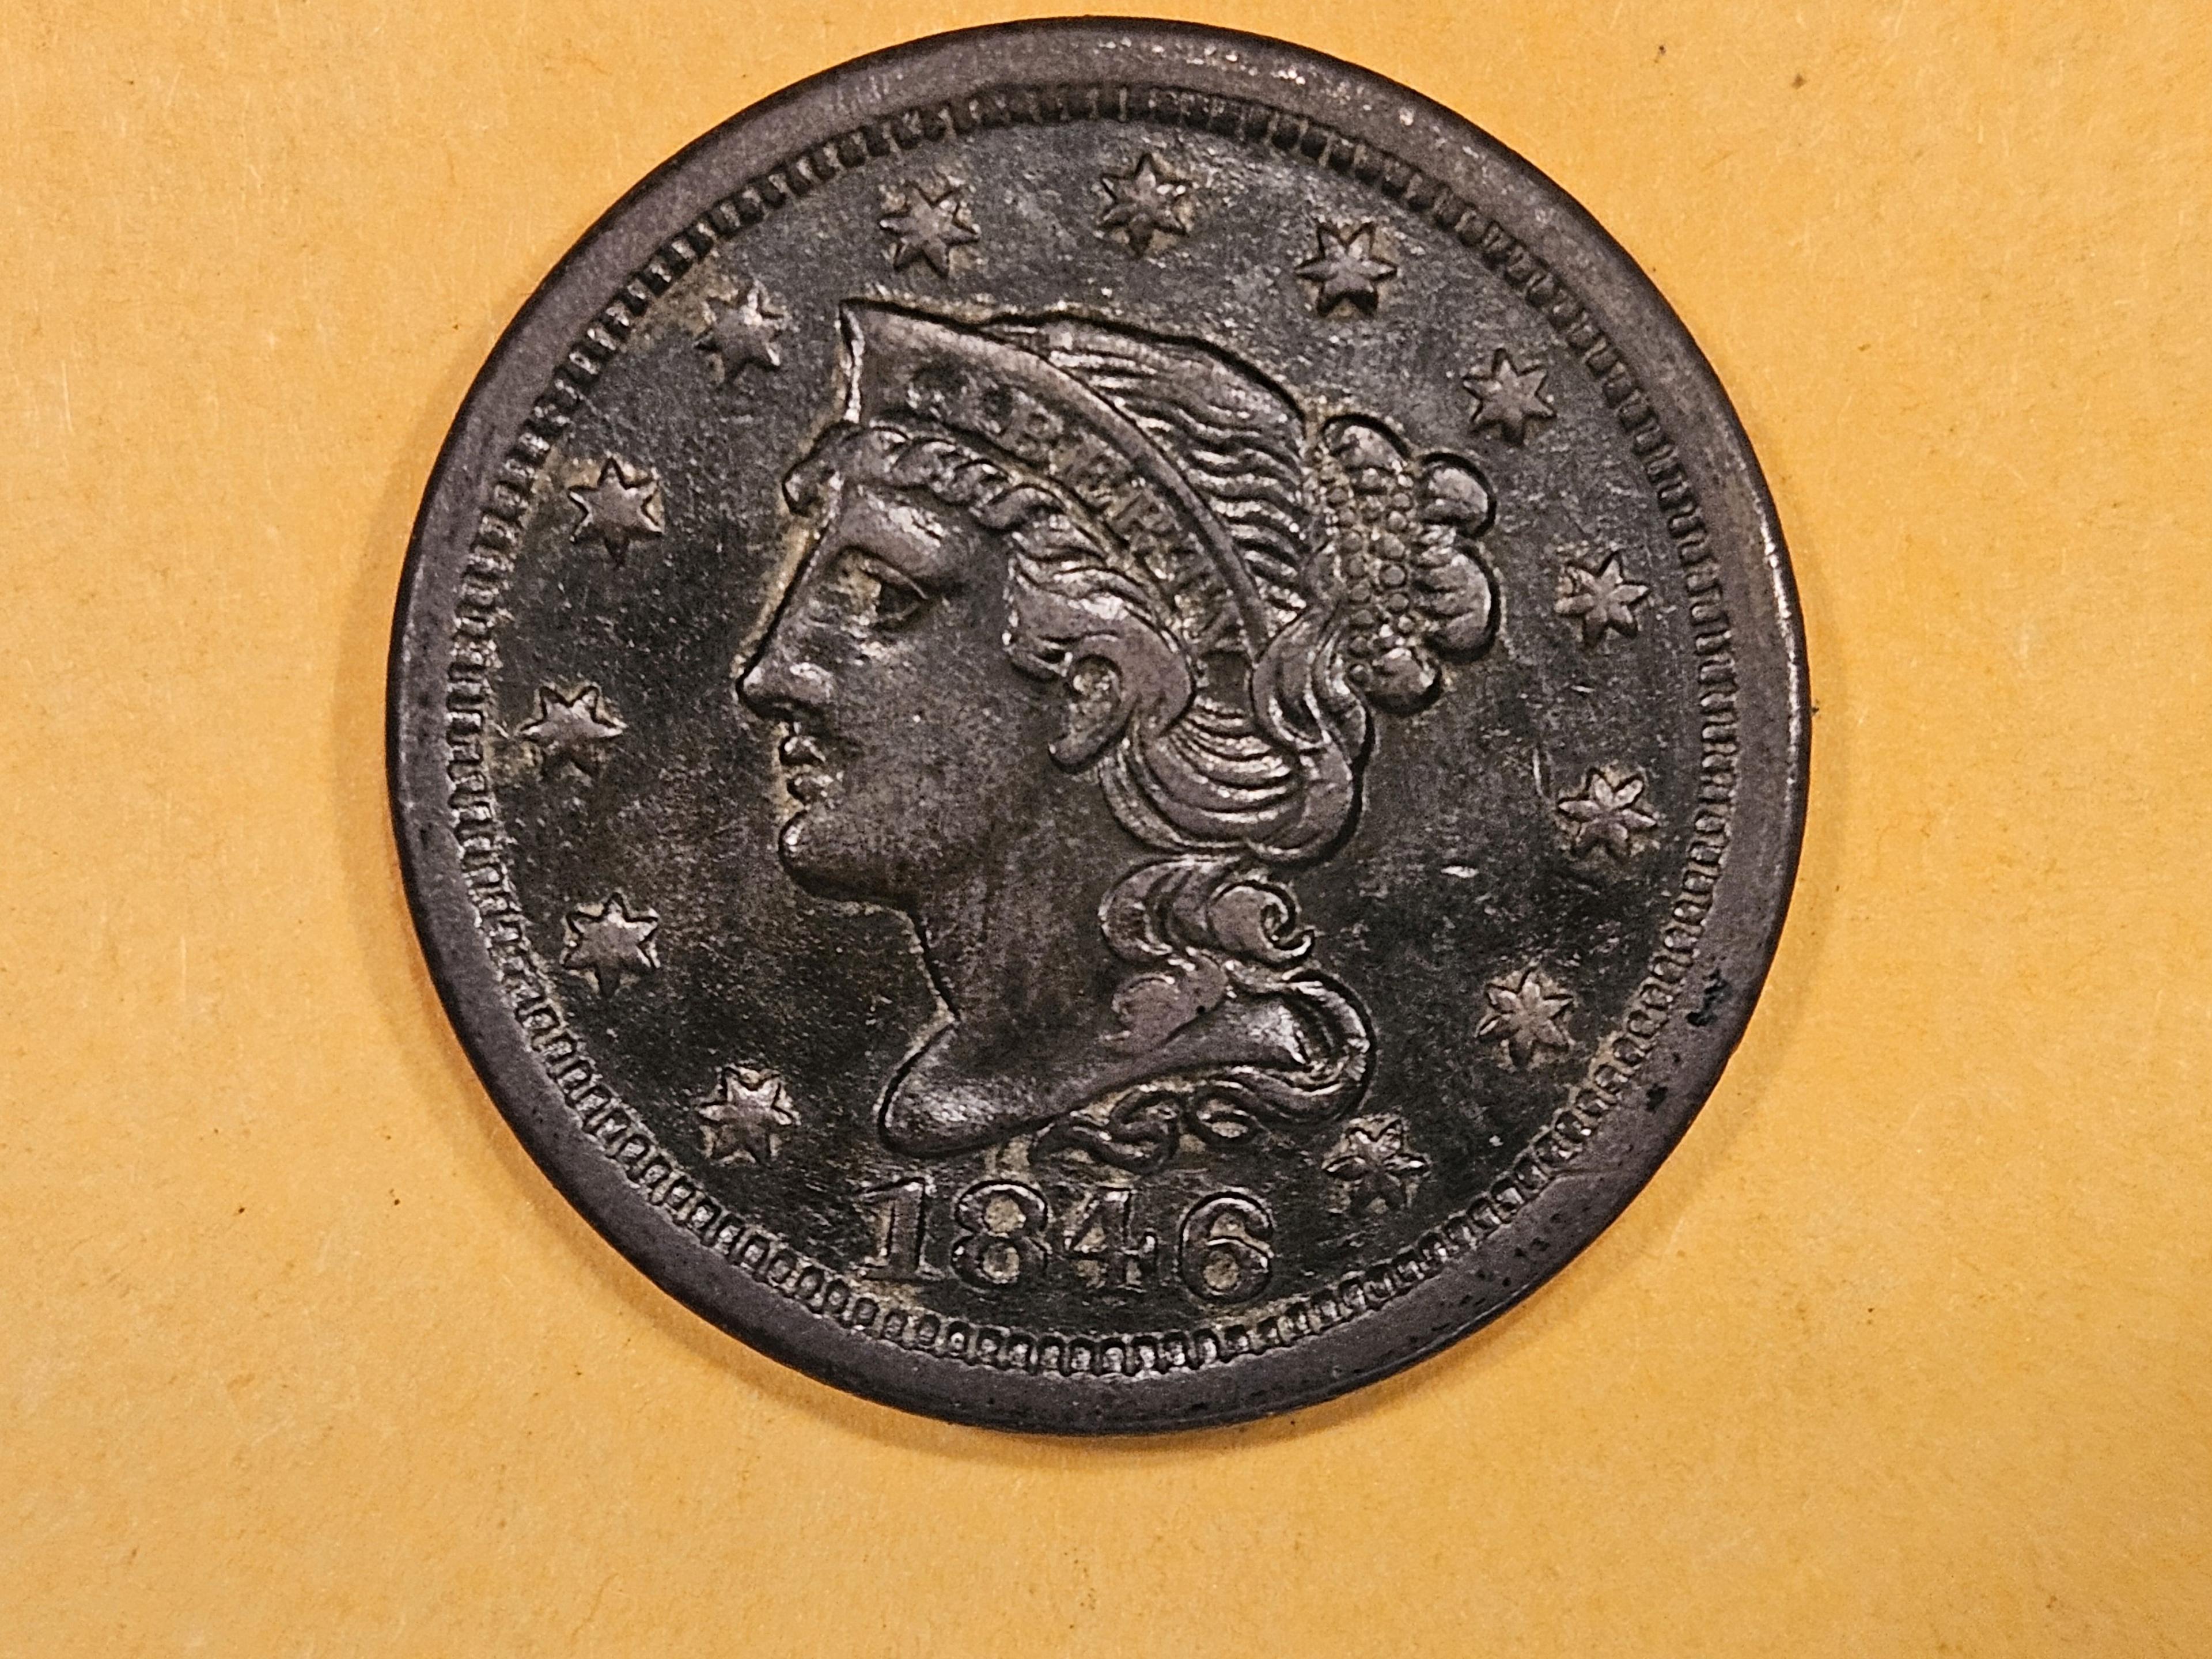 1846 Braided Hair large Cent